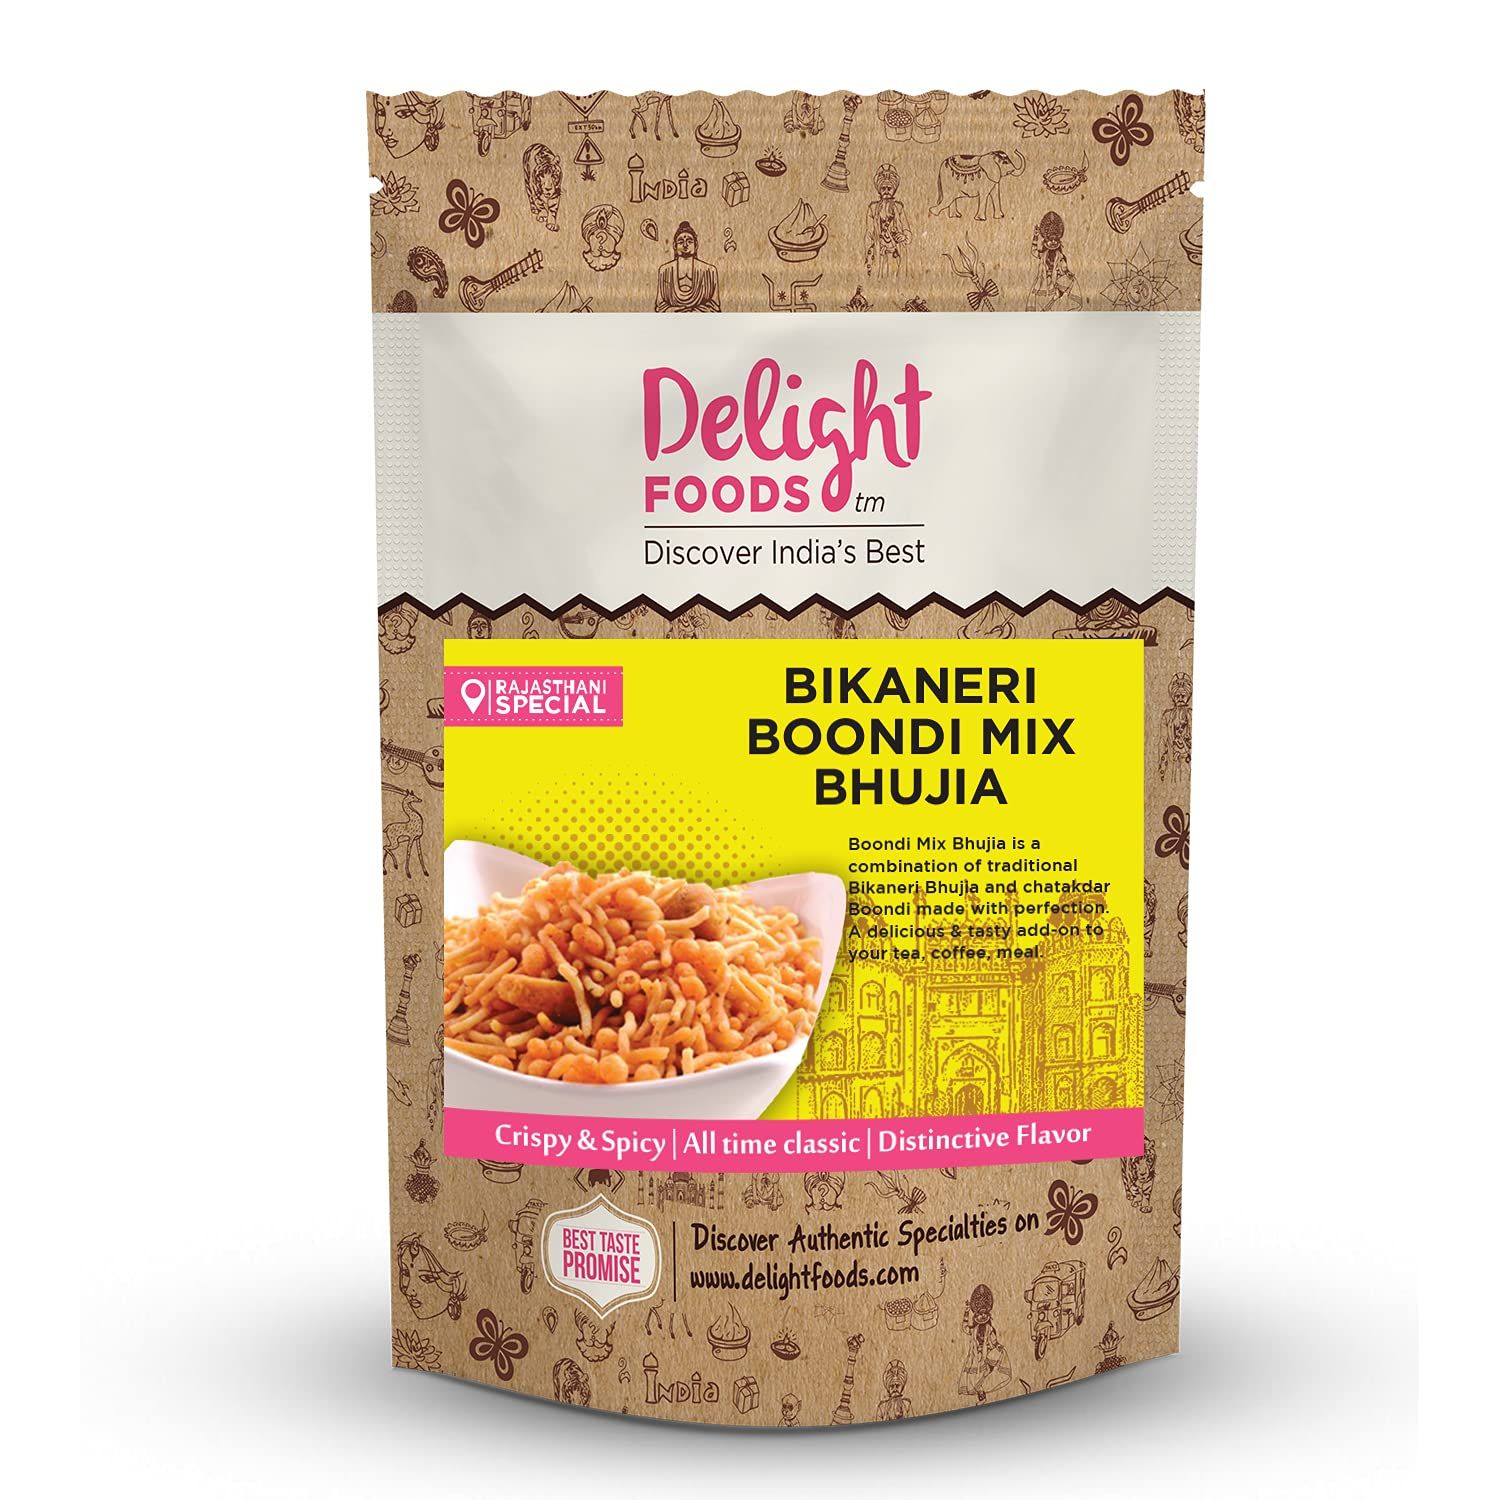 Delight Foods Bikaneri Boondi Mix Image